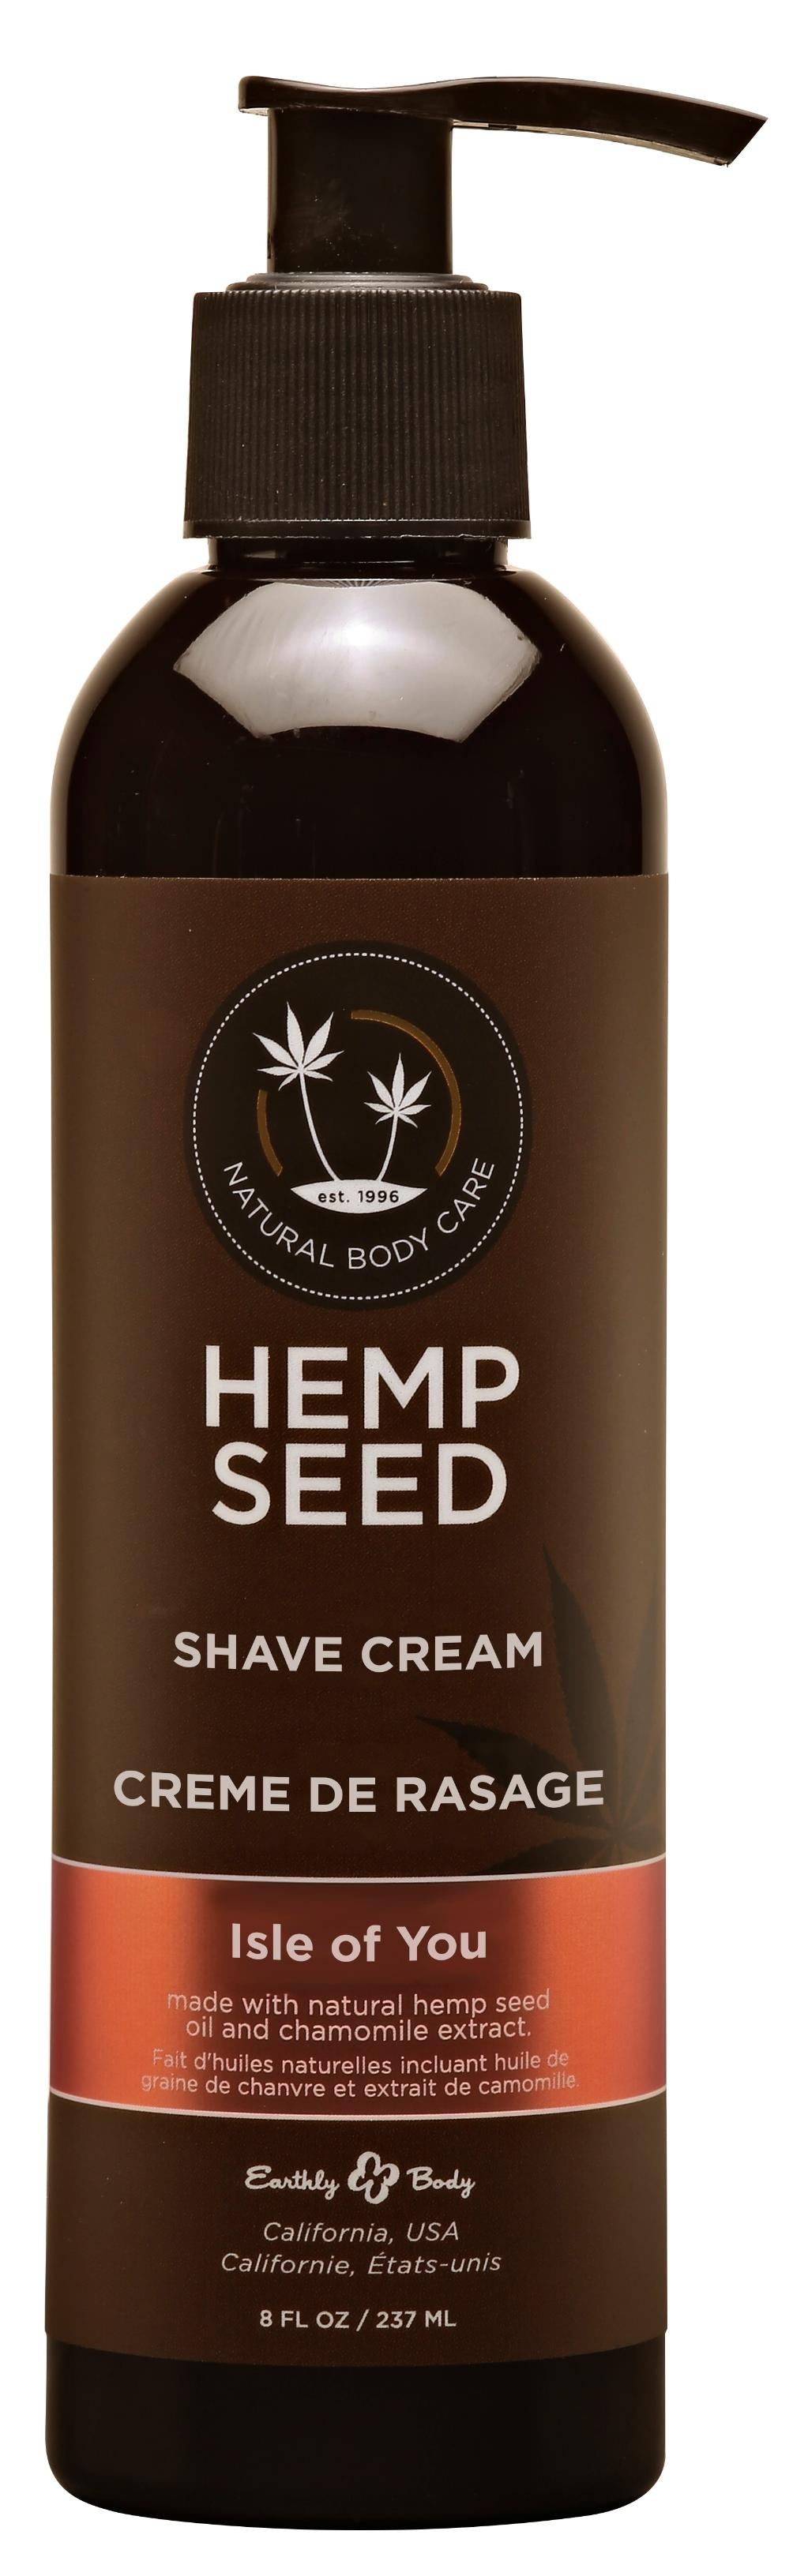 Hemp Seed Shave Cream - Isle of You 8oz